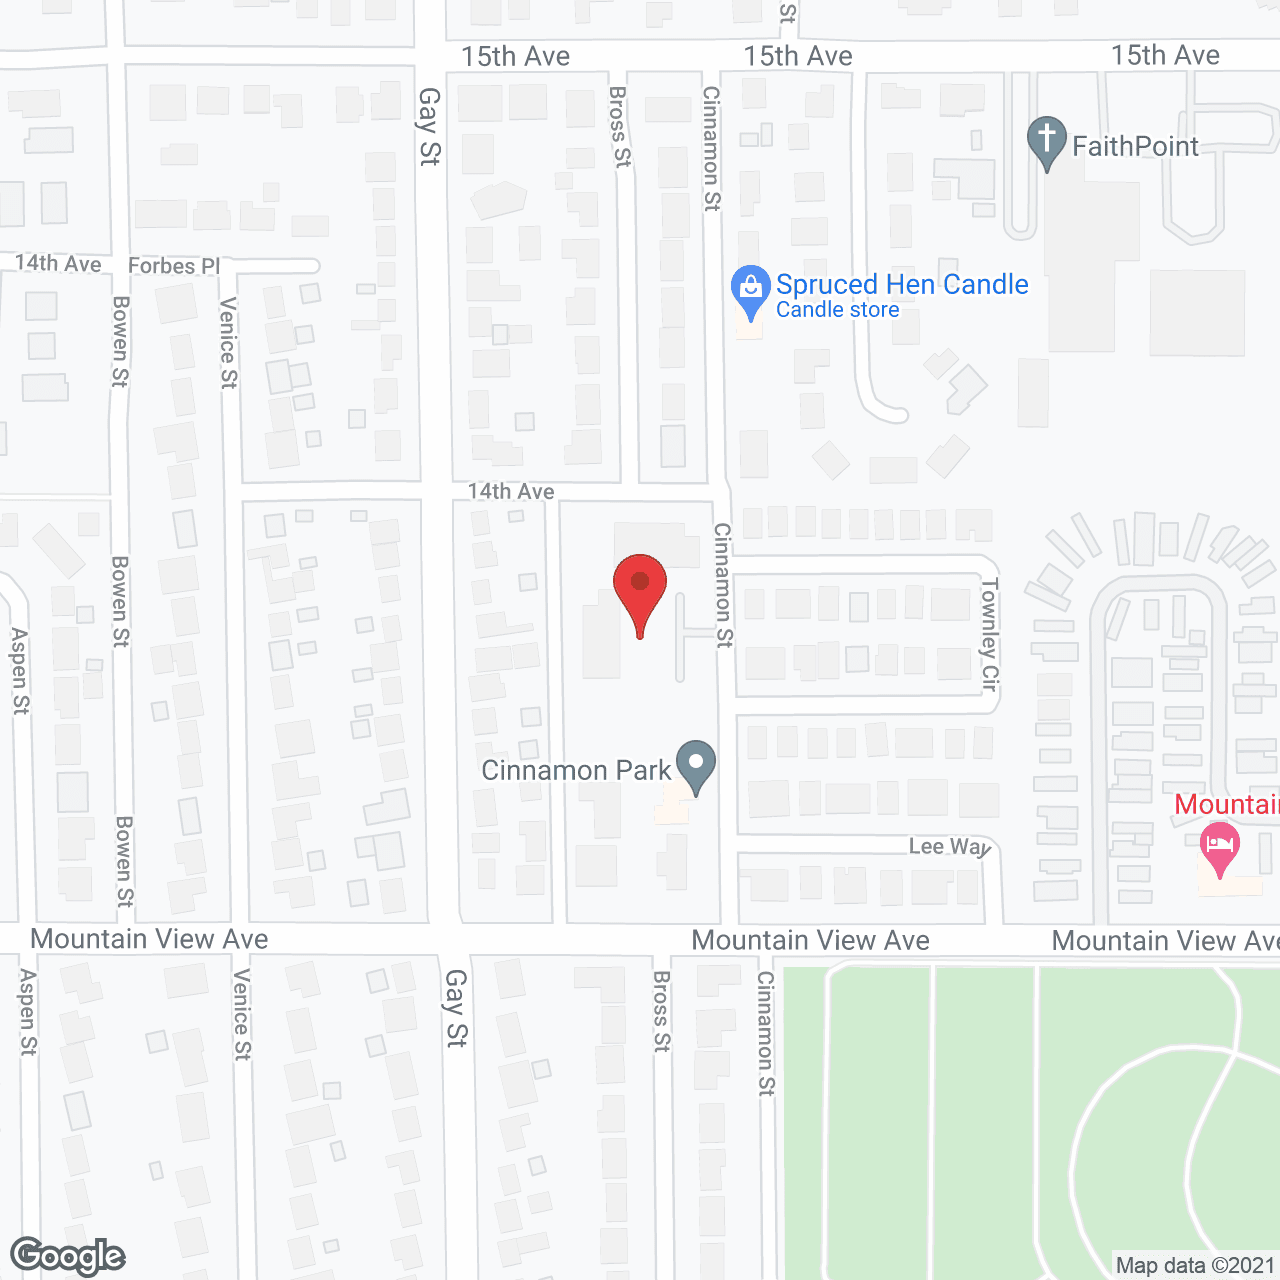 Cinnamon Park in google map